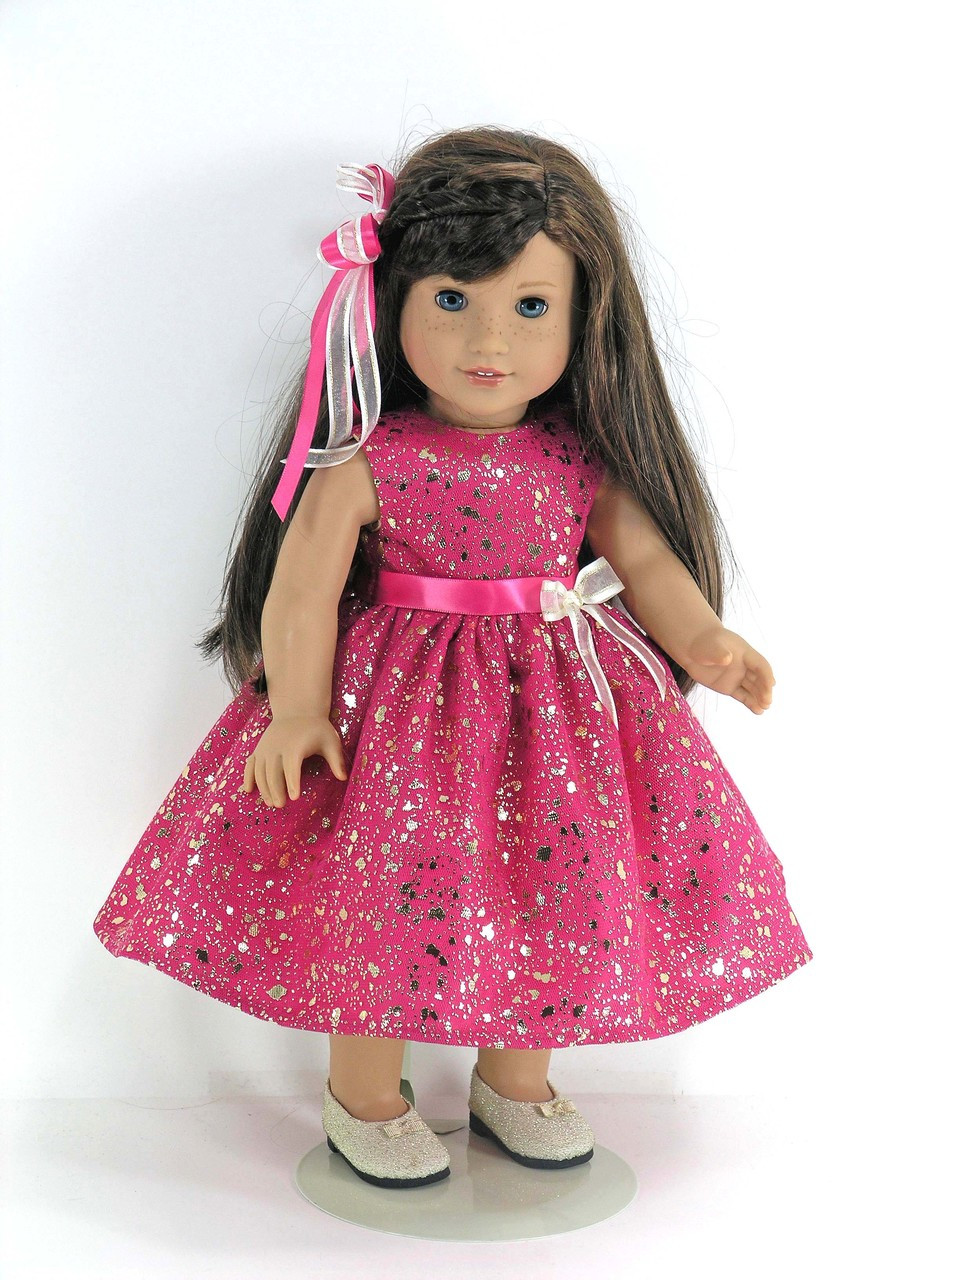 Doll Clothes Handmade for American Girl - Dress, Headband, Pantaloons -  Pink, Gold Lace and Taffeta